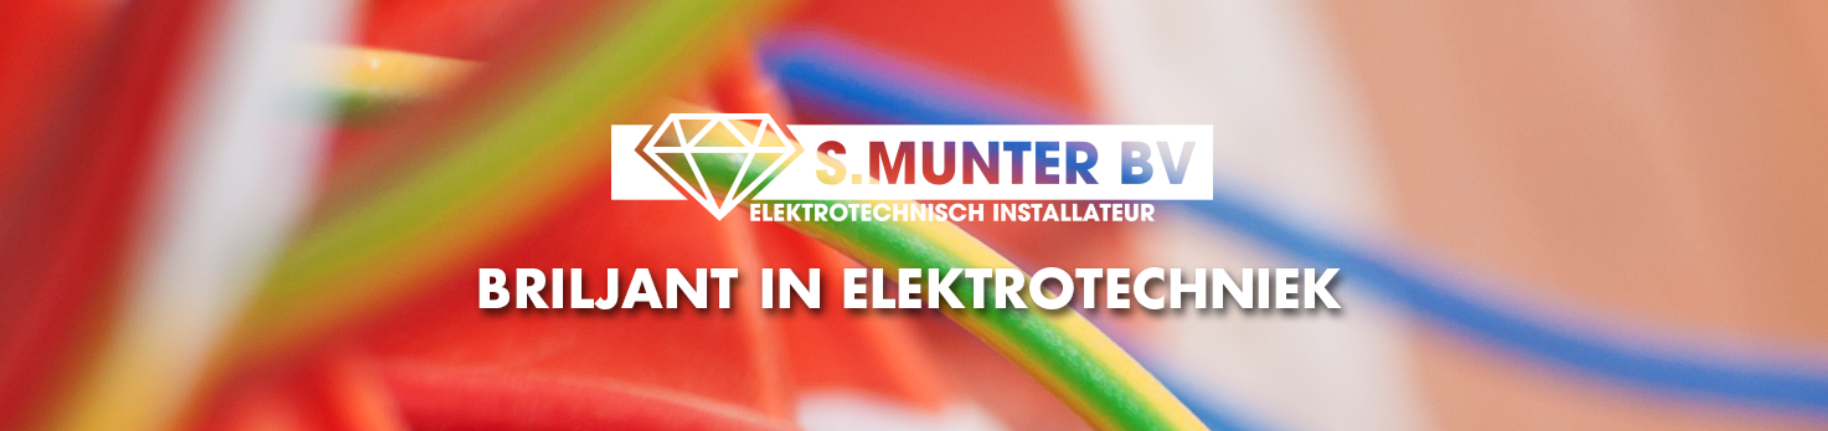 Munter Elektro neemt branchegenoot Kamerling Elektrotechniek over